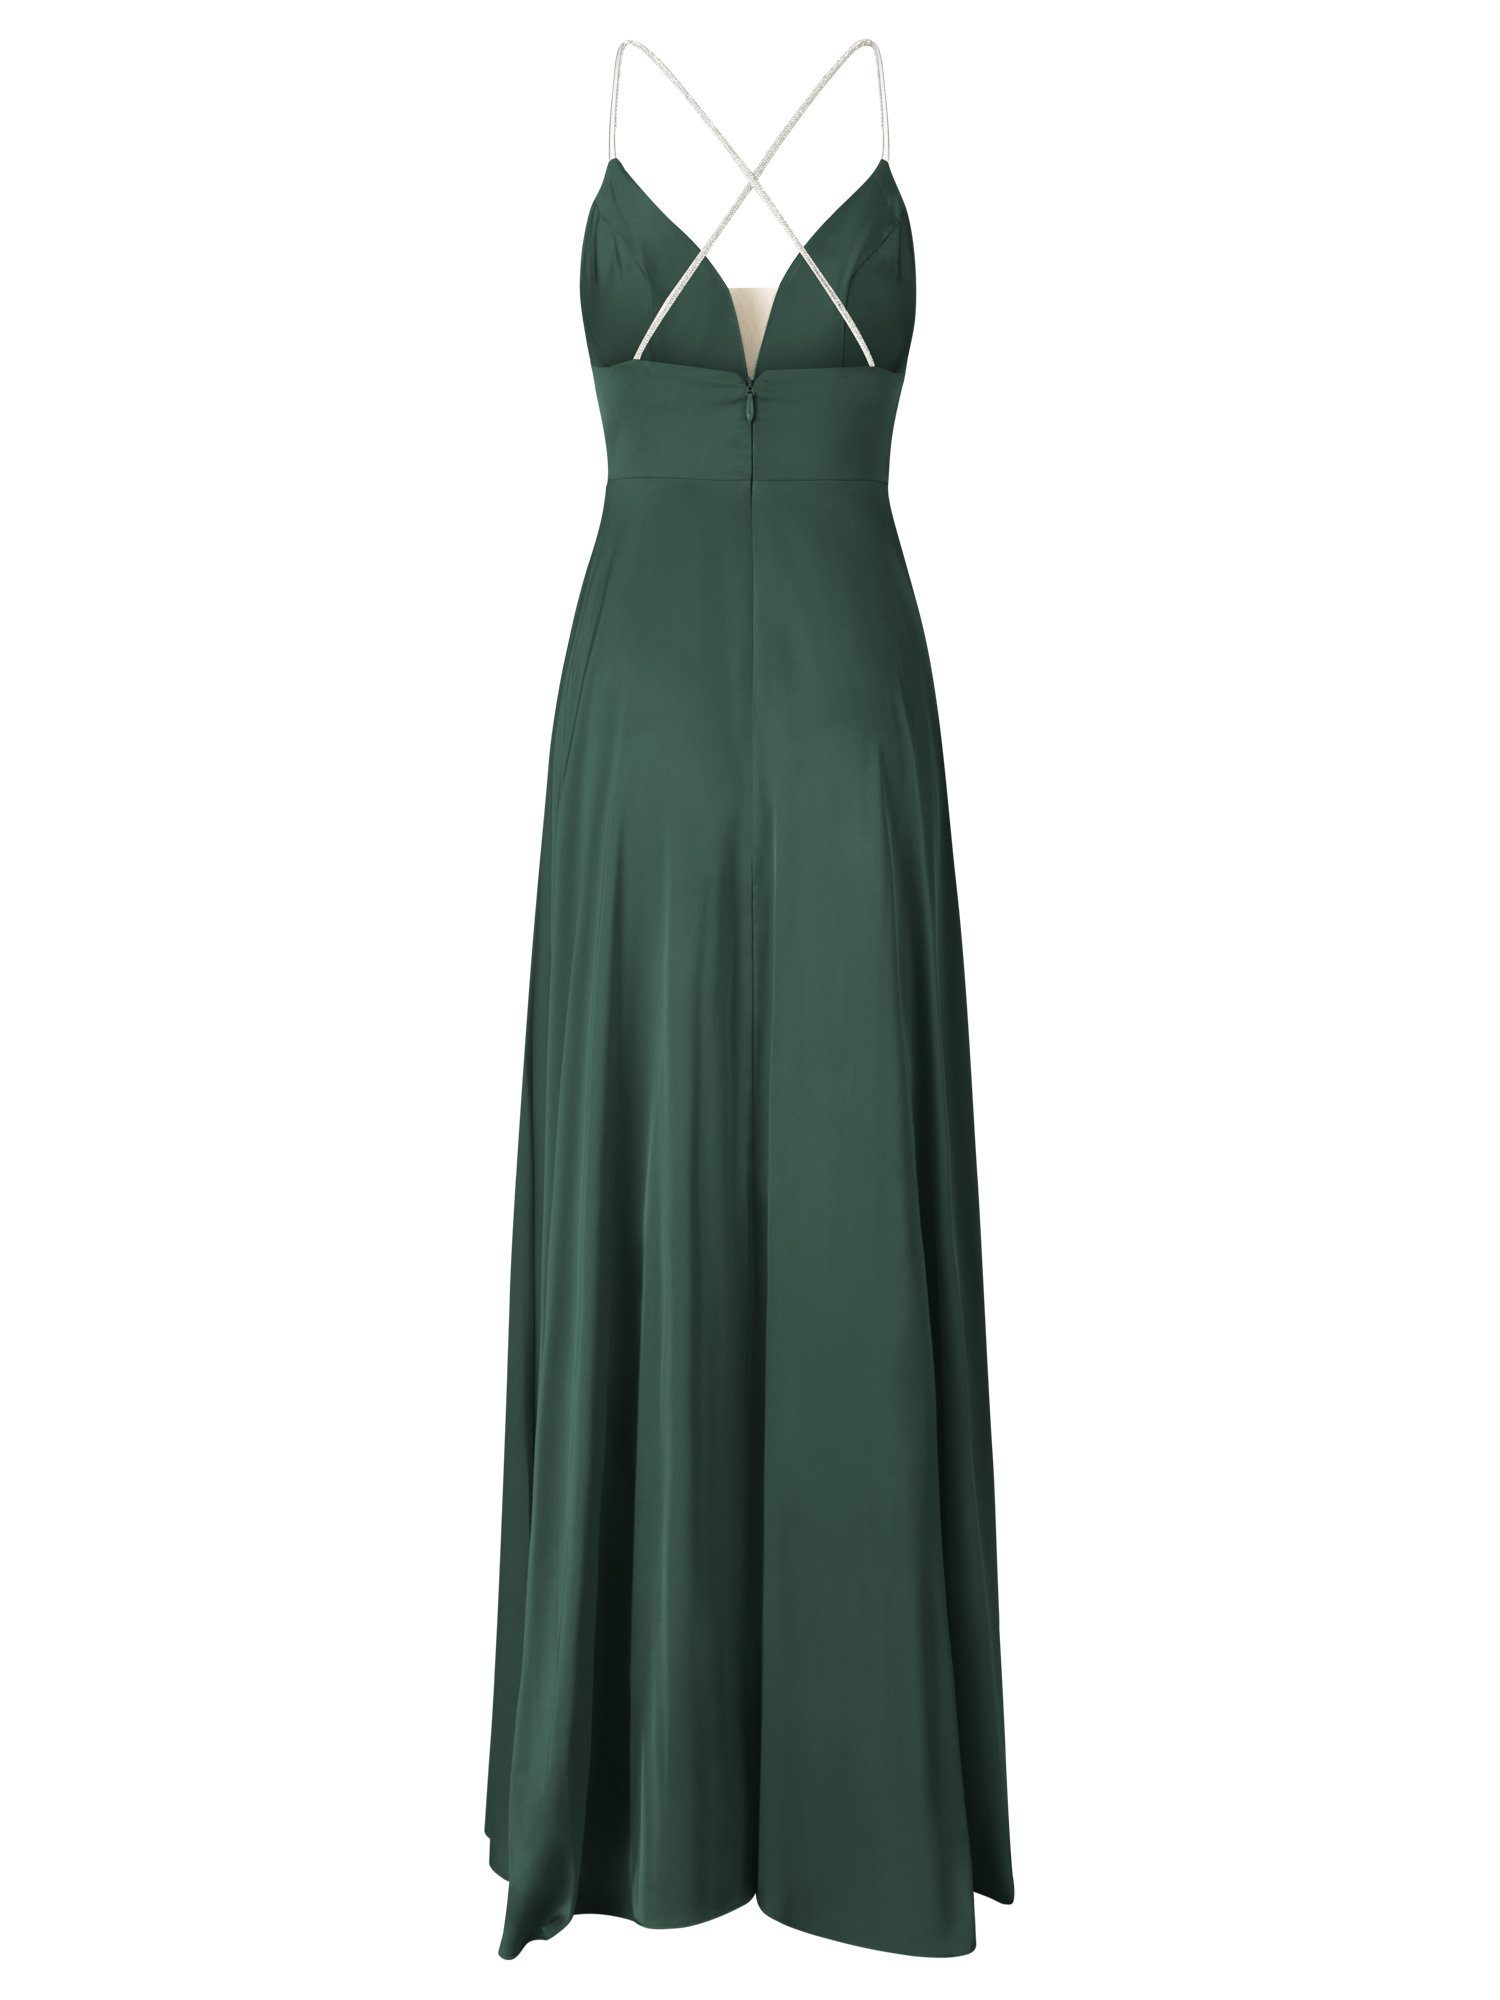 Abendkleid Apart emerald elegantem Stil mit